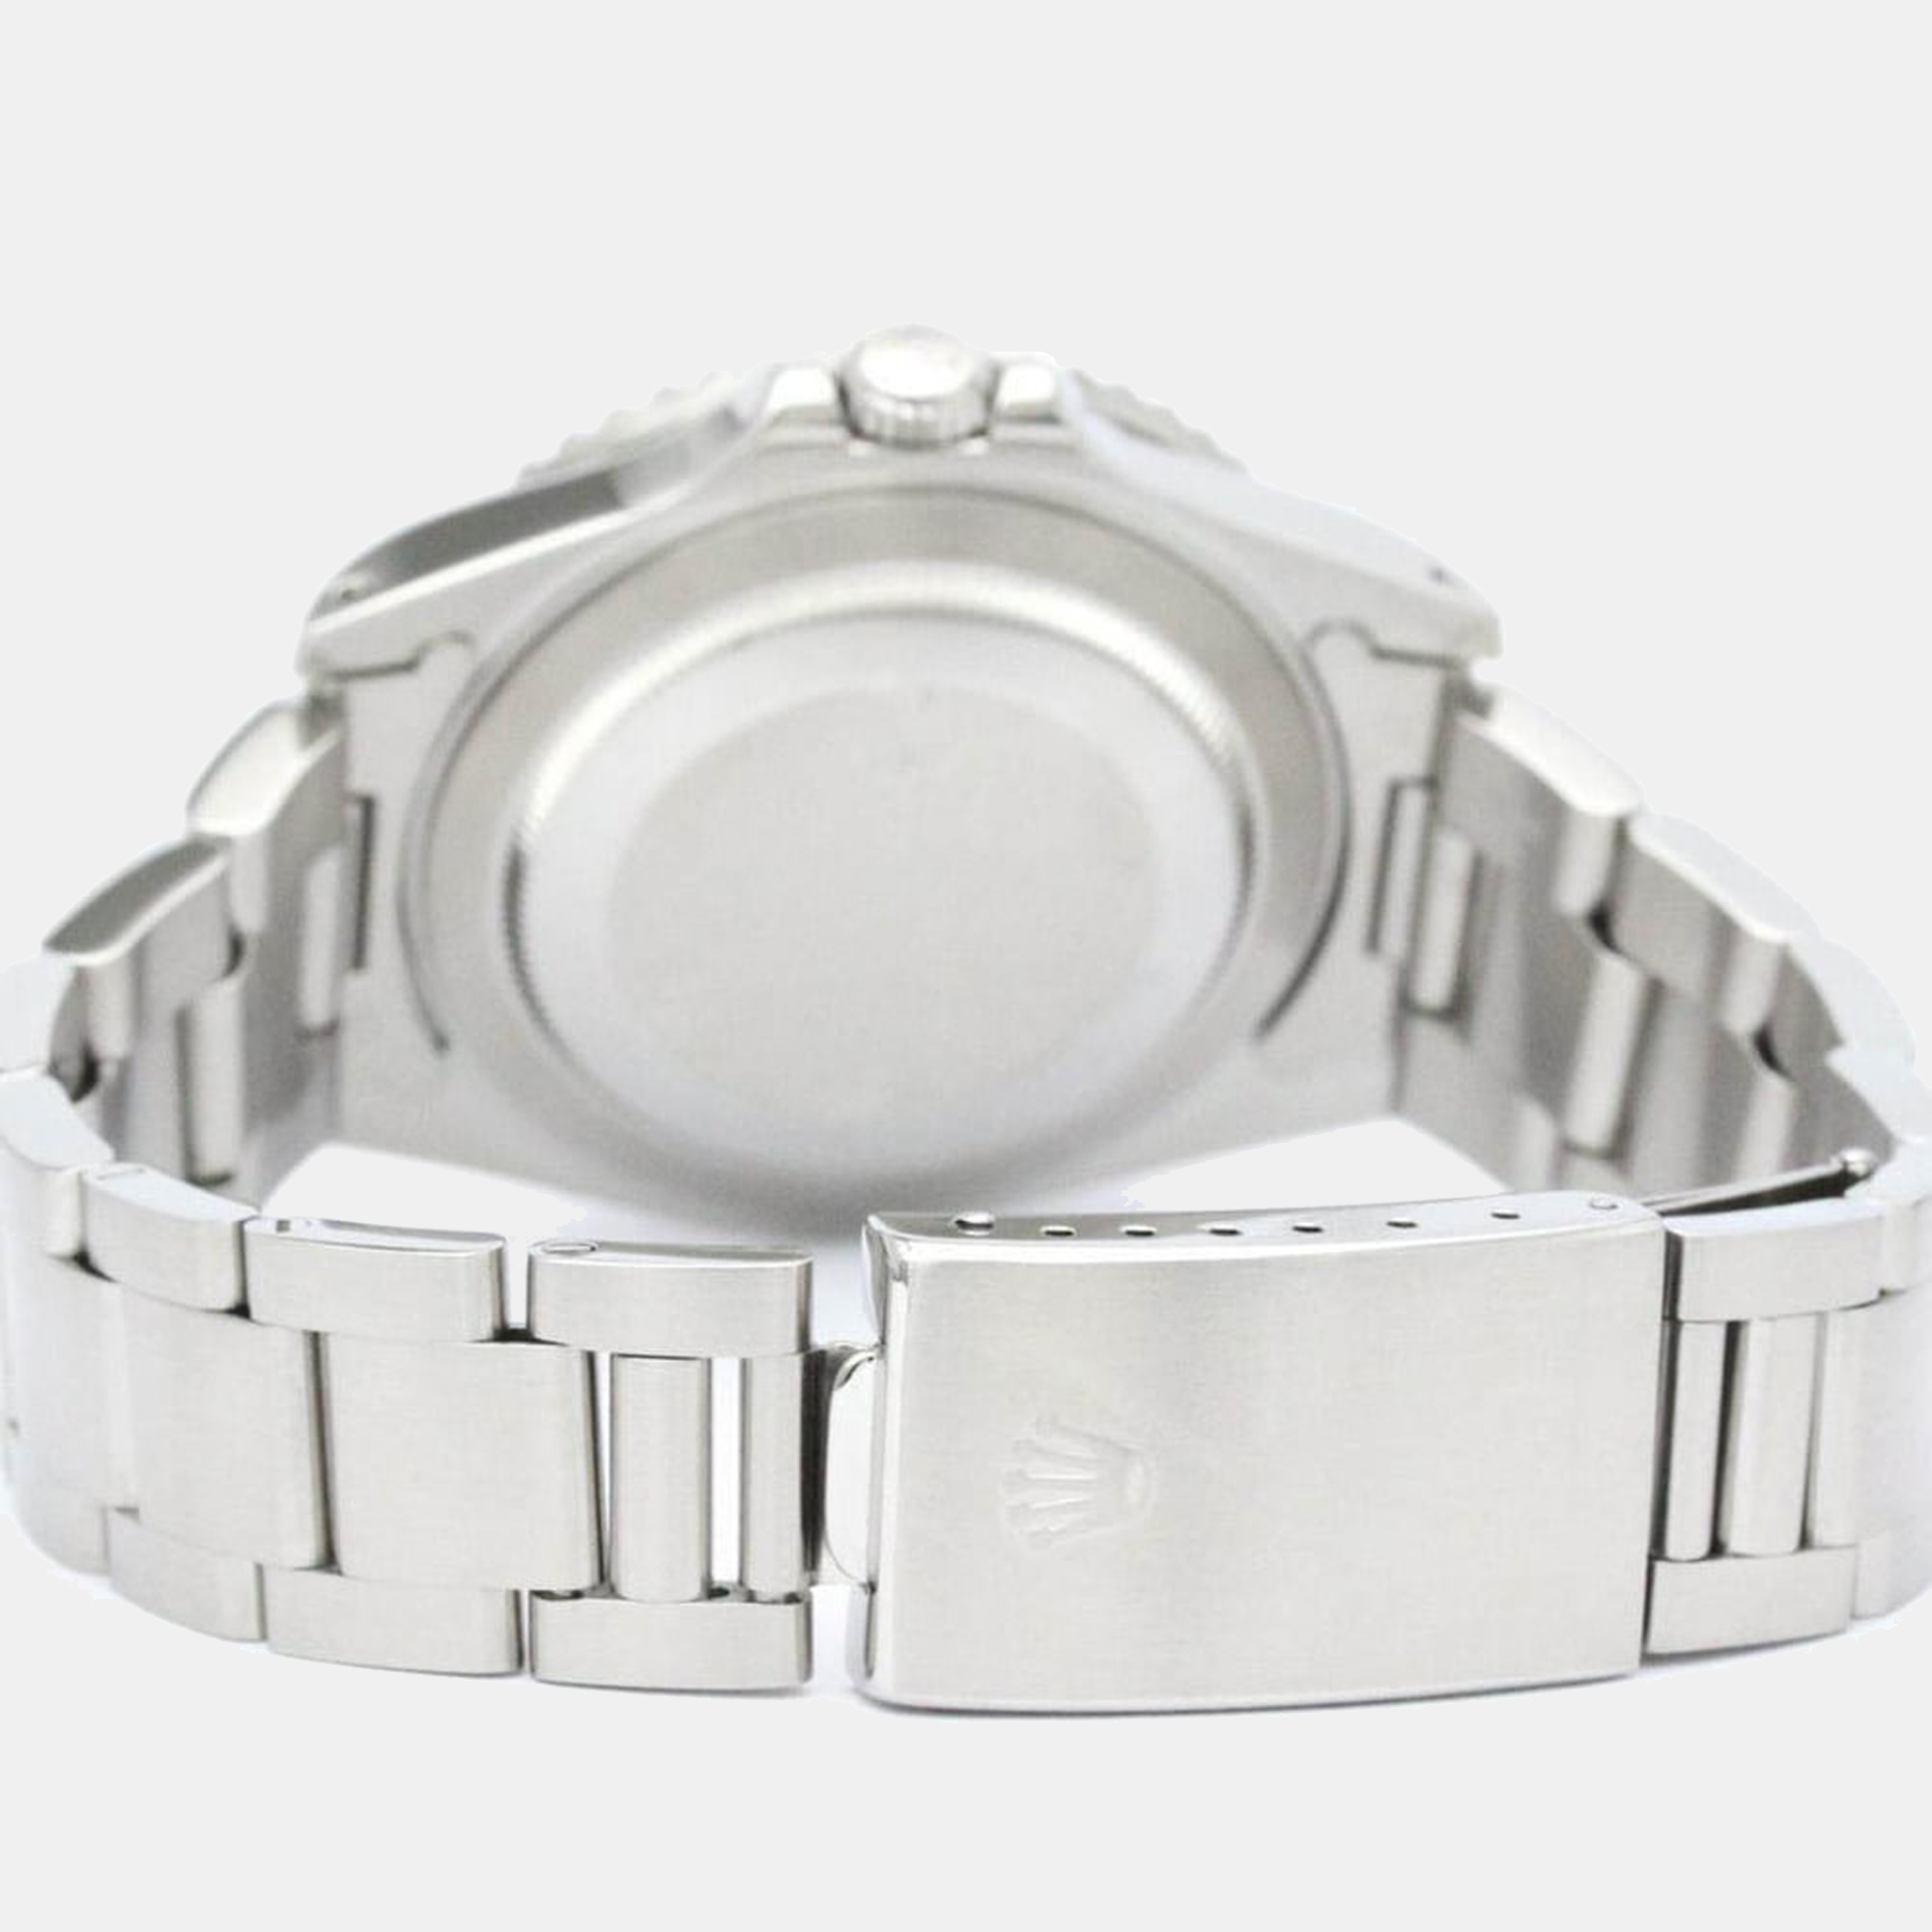 Rolex Black Stainless Steel GMT-Master II 16710 Automatic Men's Wristwatch 40mm